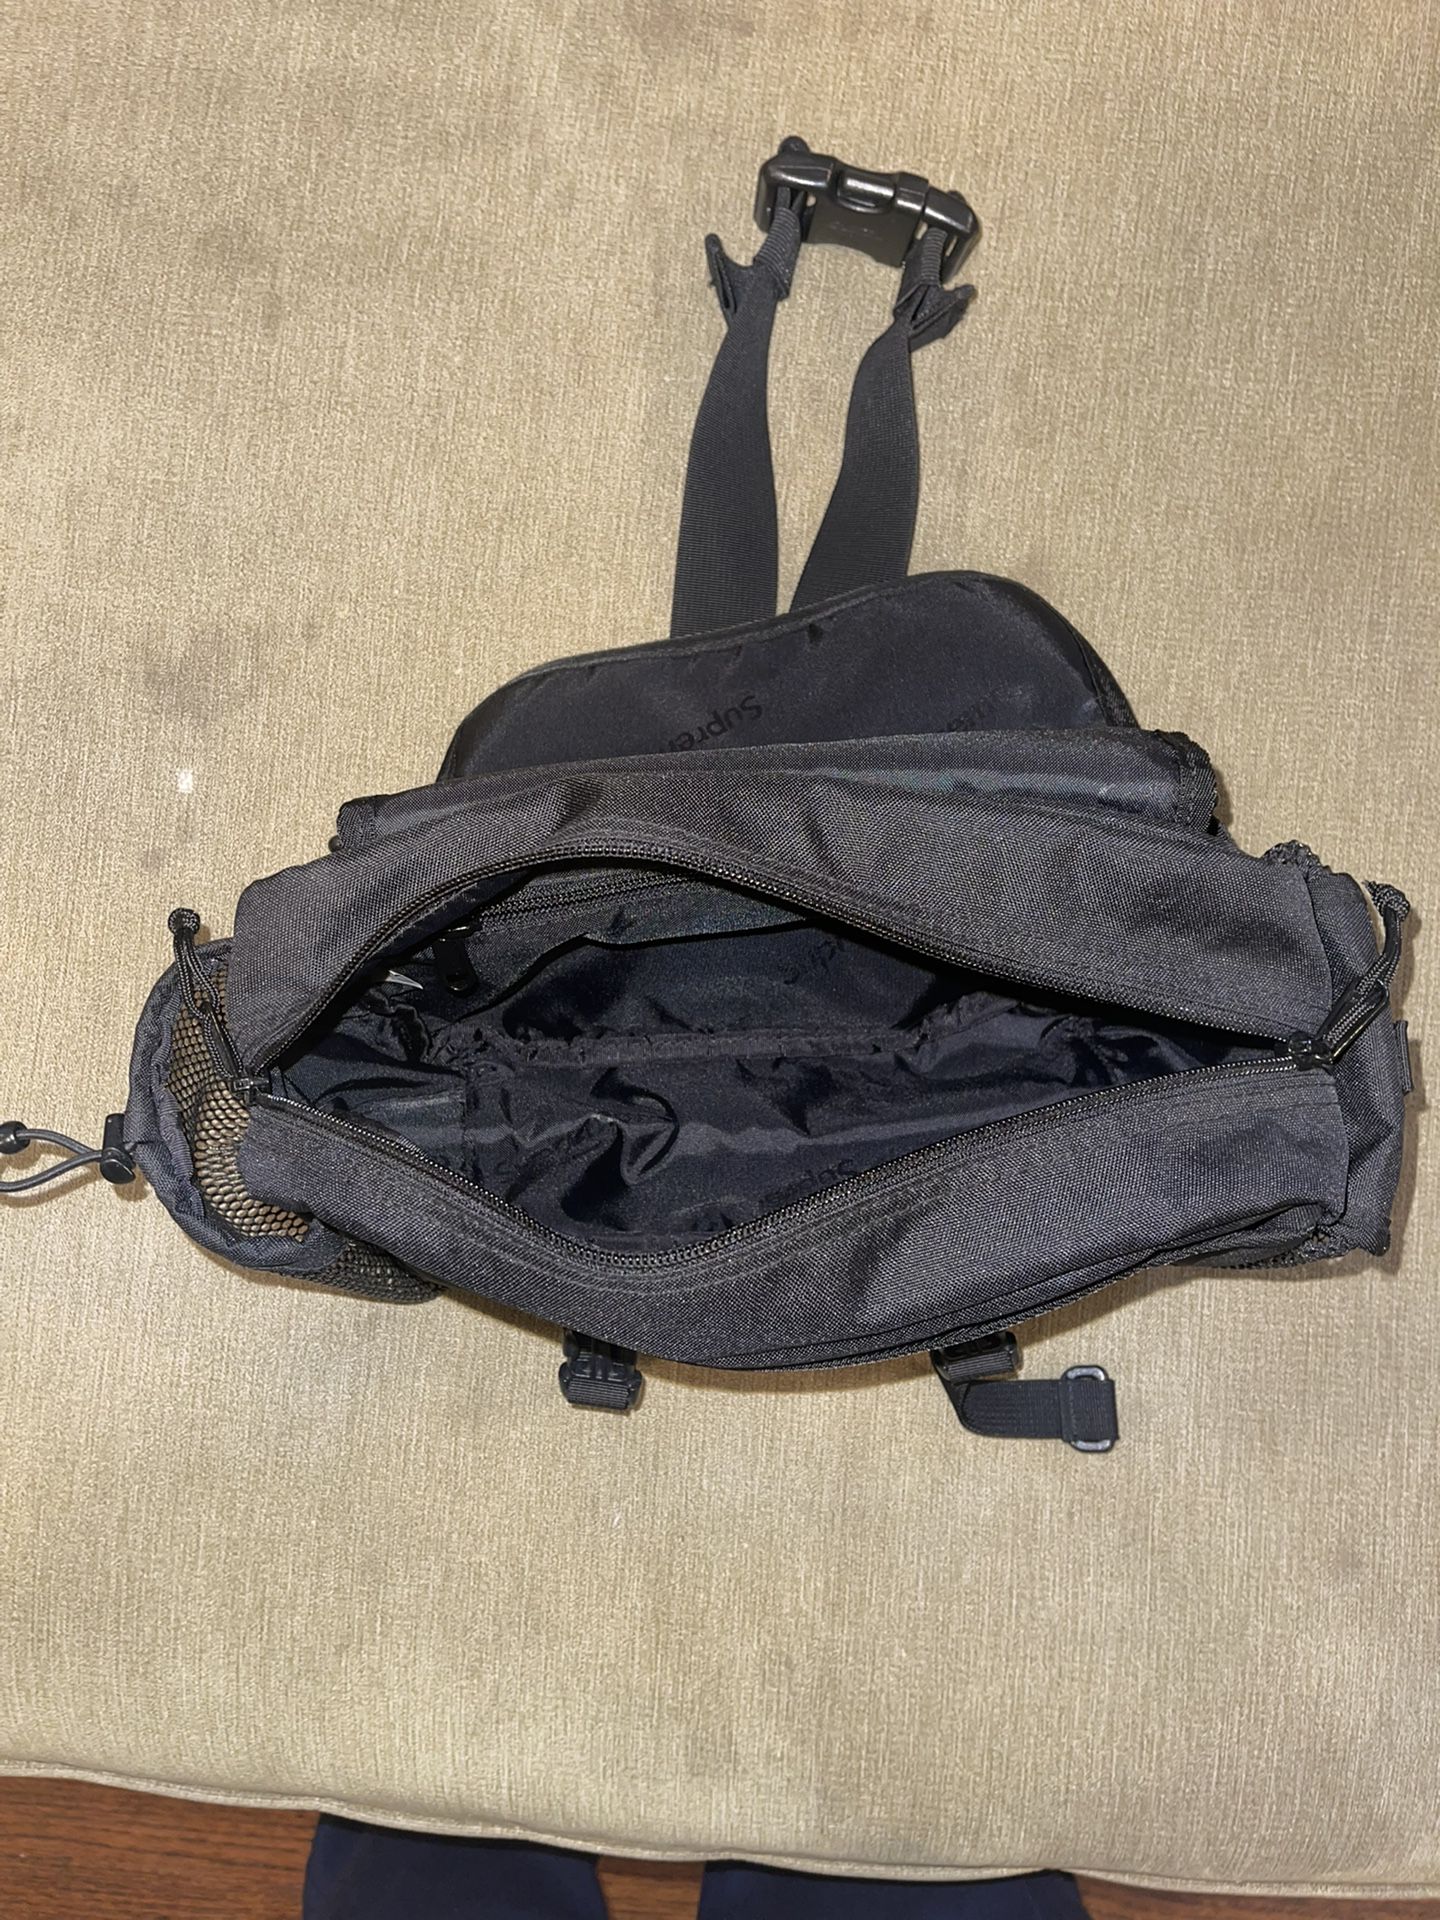 supreme ss20 waist bag｜TikTok Search